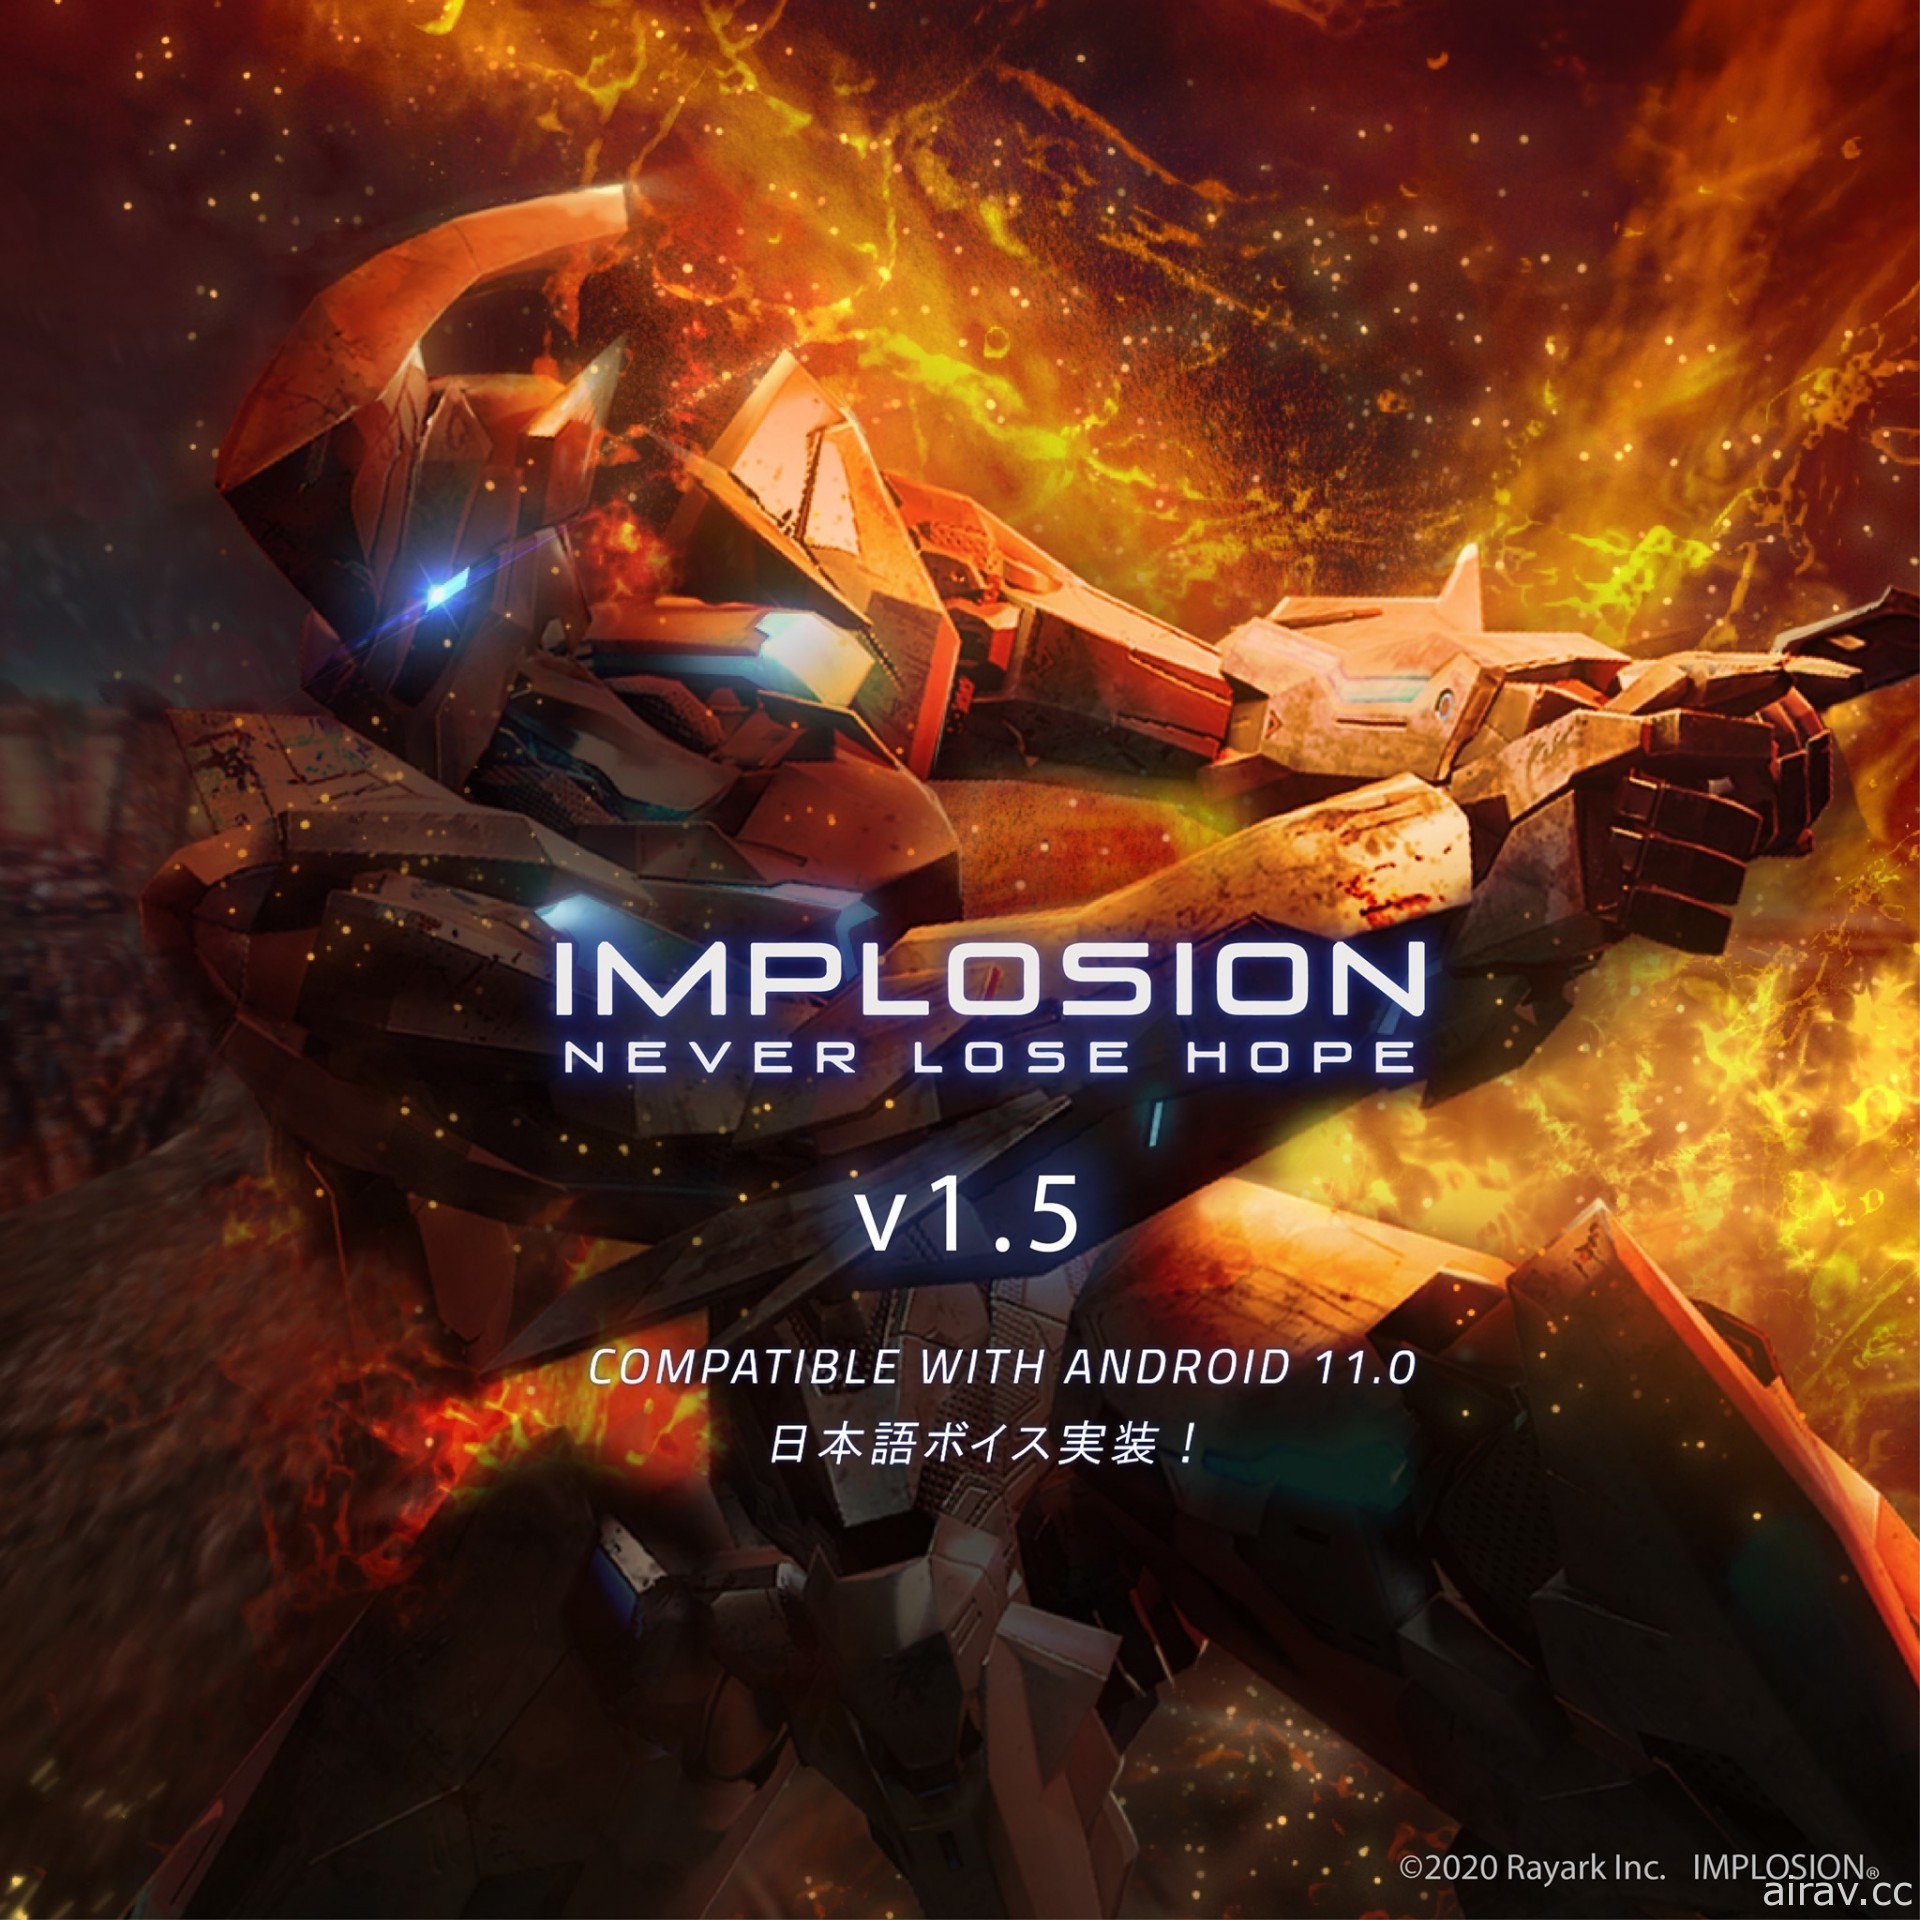 《Implosion 聚爆》于 v1.5 更新版本新增日文语音 推出 iOS、Android 版本限时特惠